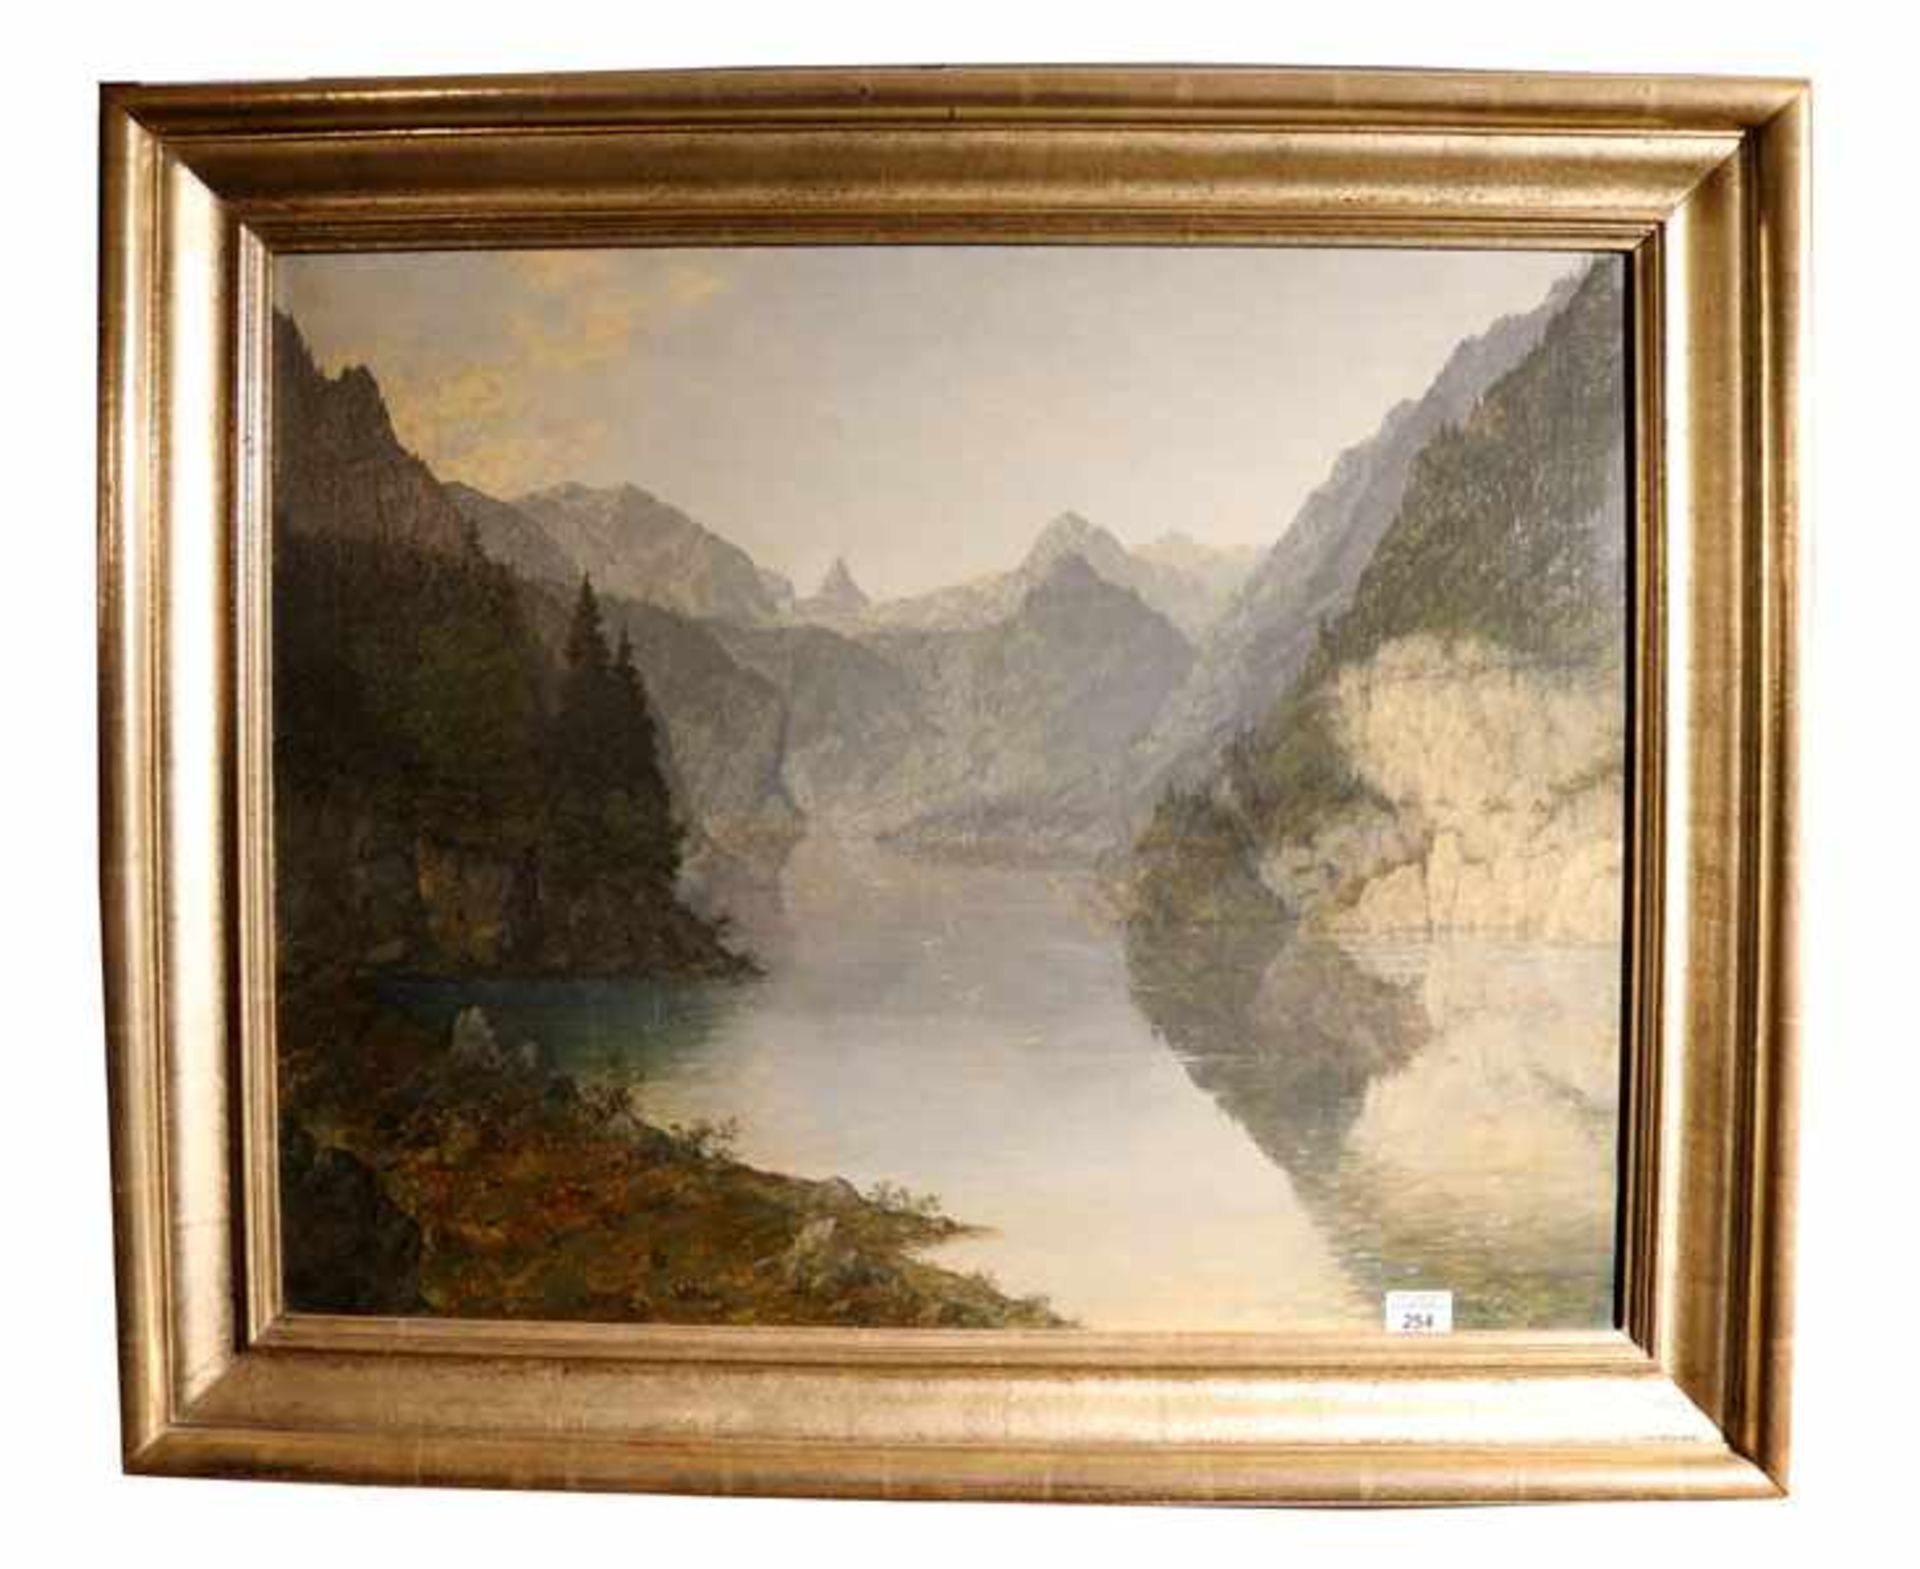 Gemälde ÖL/LW 'Königssee', signiert K. Haas, 1930, gerahmt, Rahmen beschädigt, incl. Rahmen 79 cm